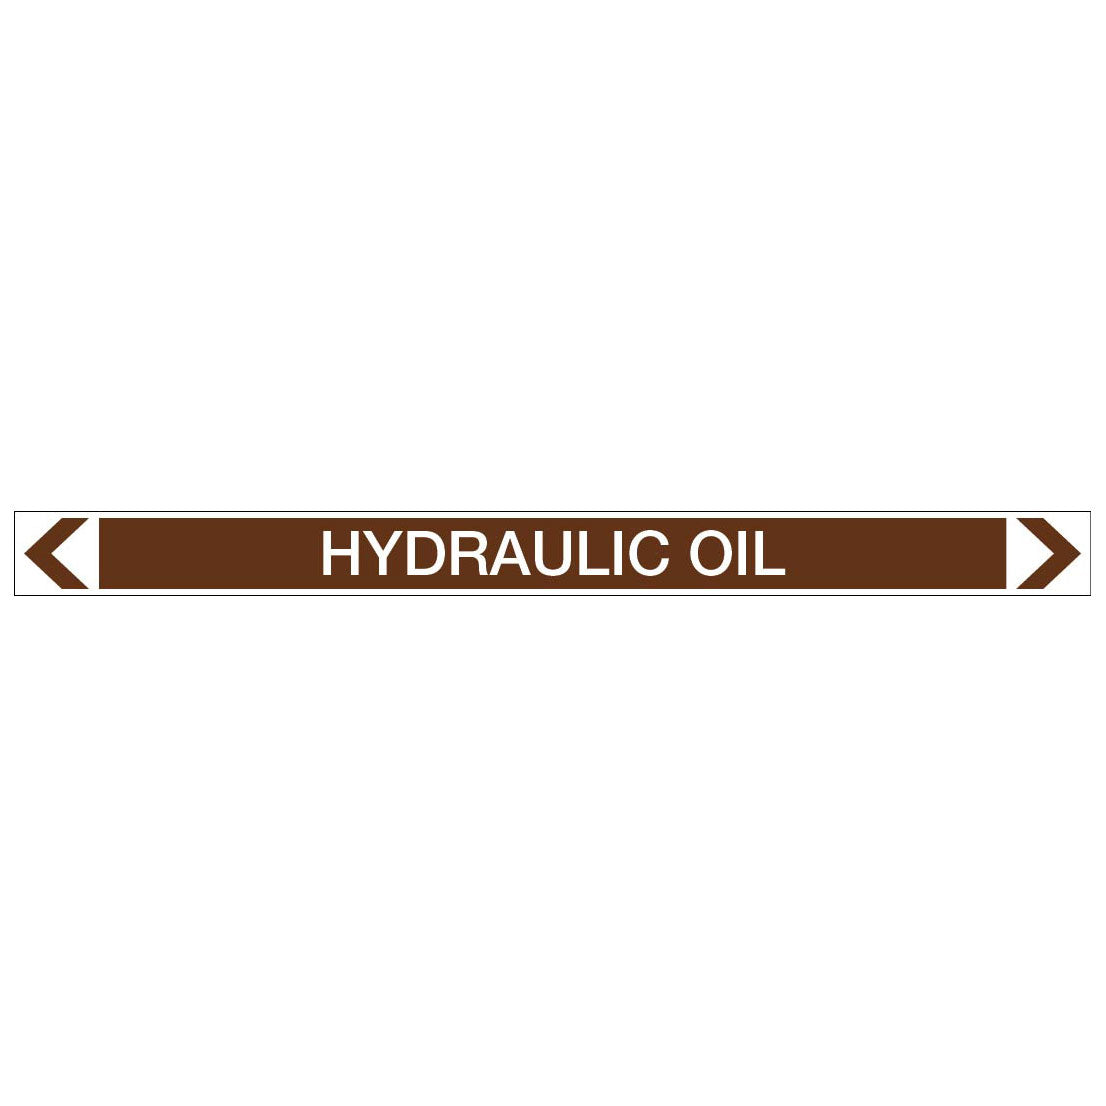 Oils - Hydraulic Oil - Pipe Marker Sticker